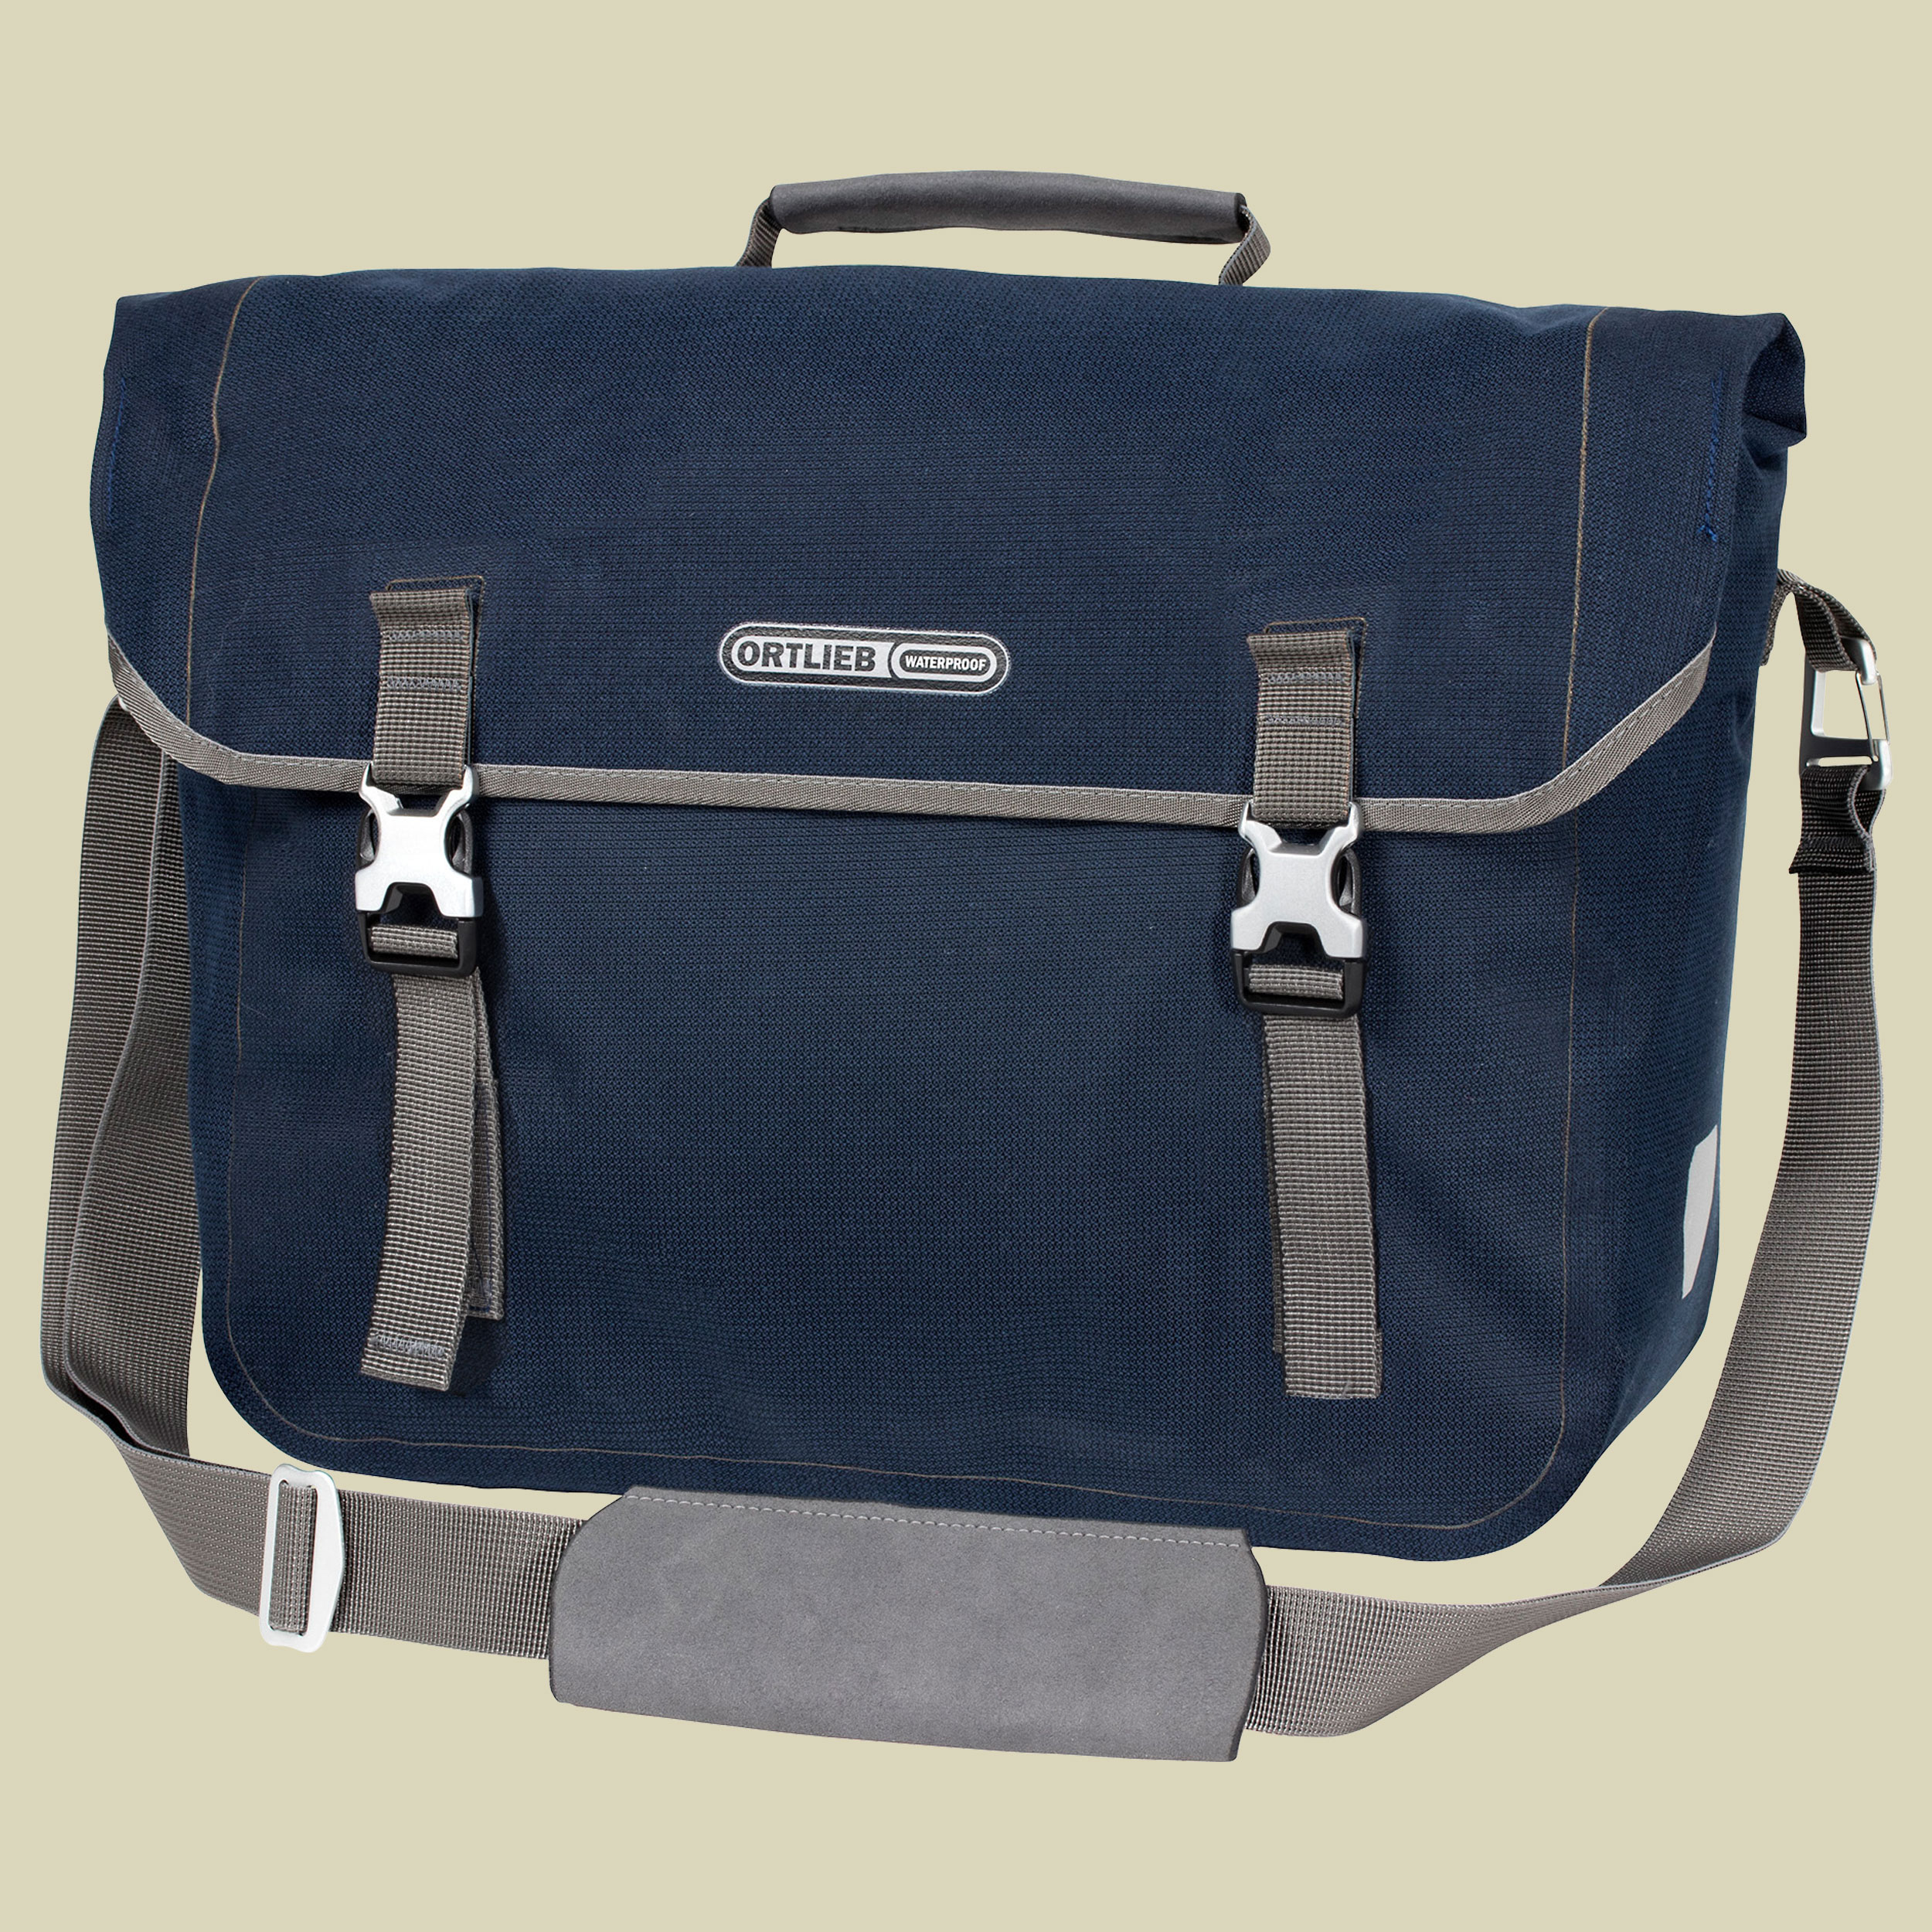 Commuter-Bag Two Urban QL2.1